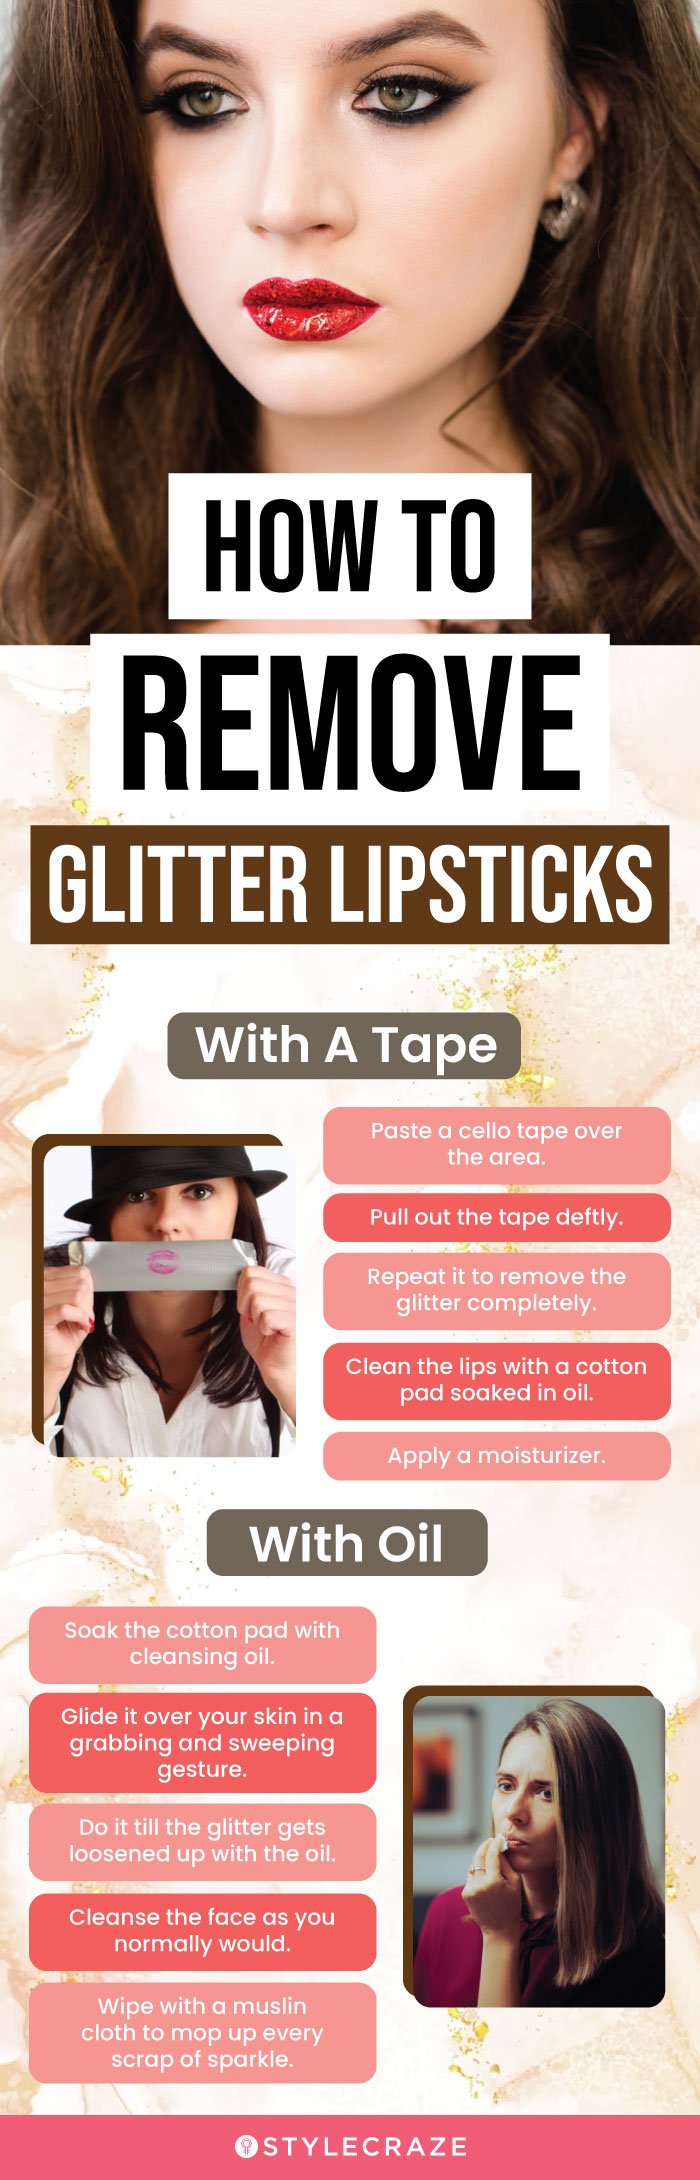 How To Remove Glitter Lipsticks (infographic)